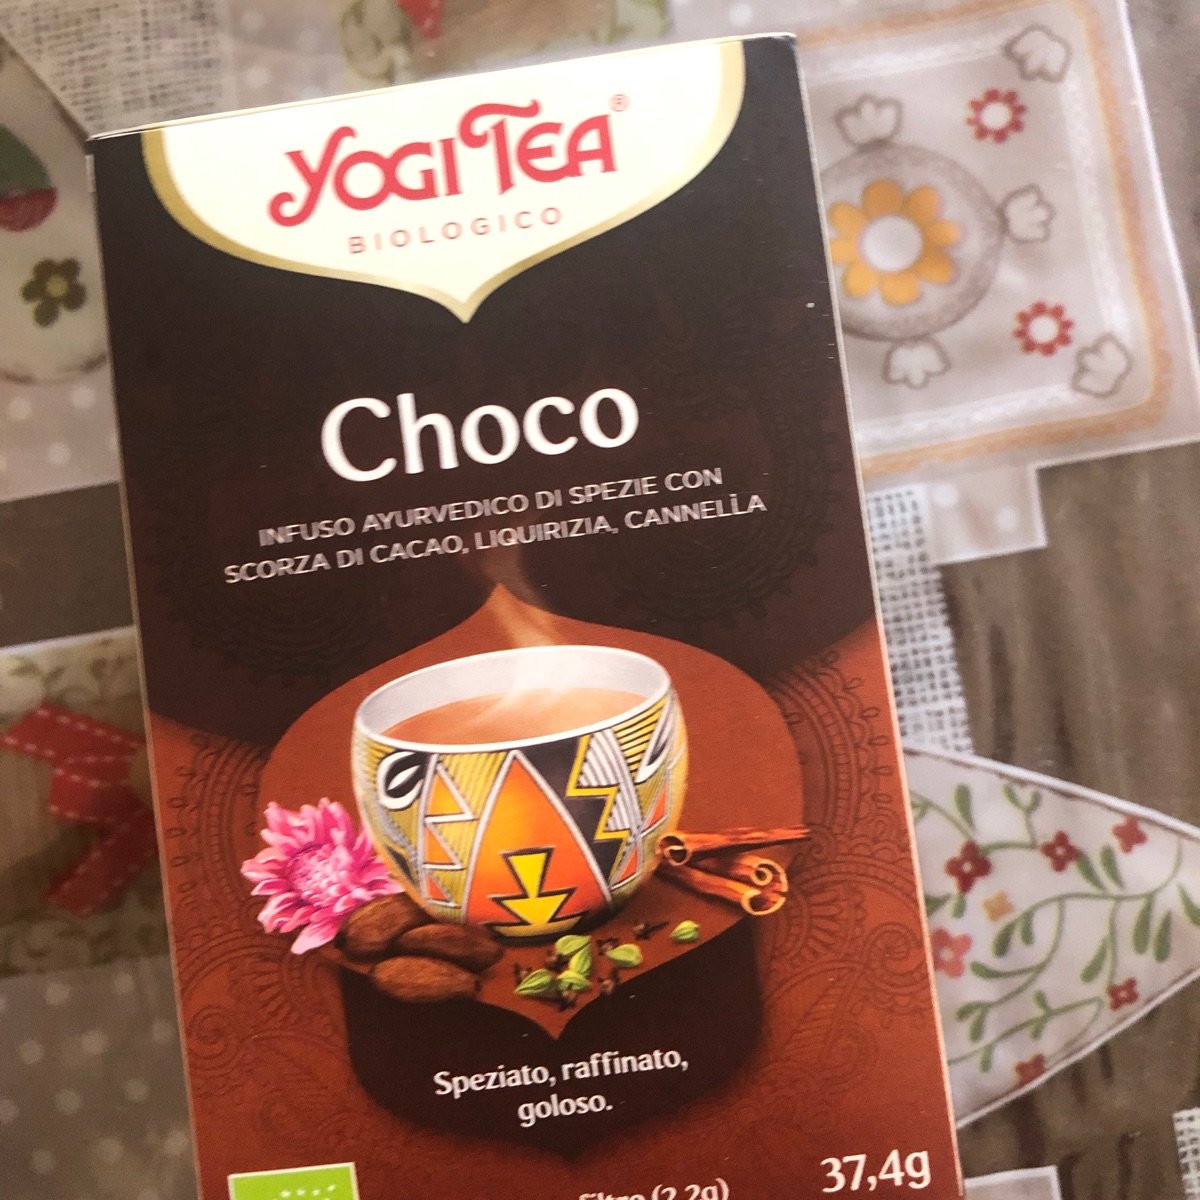 Yogi Tea Organic Choco Review